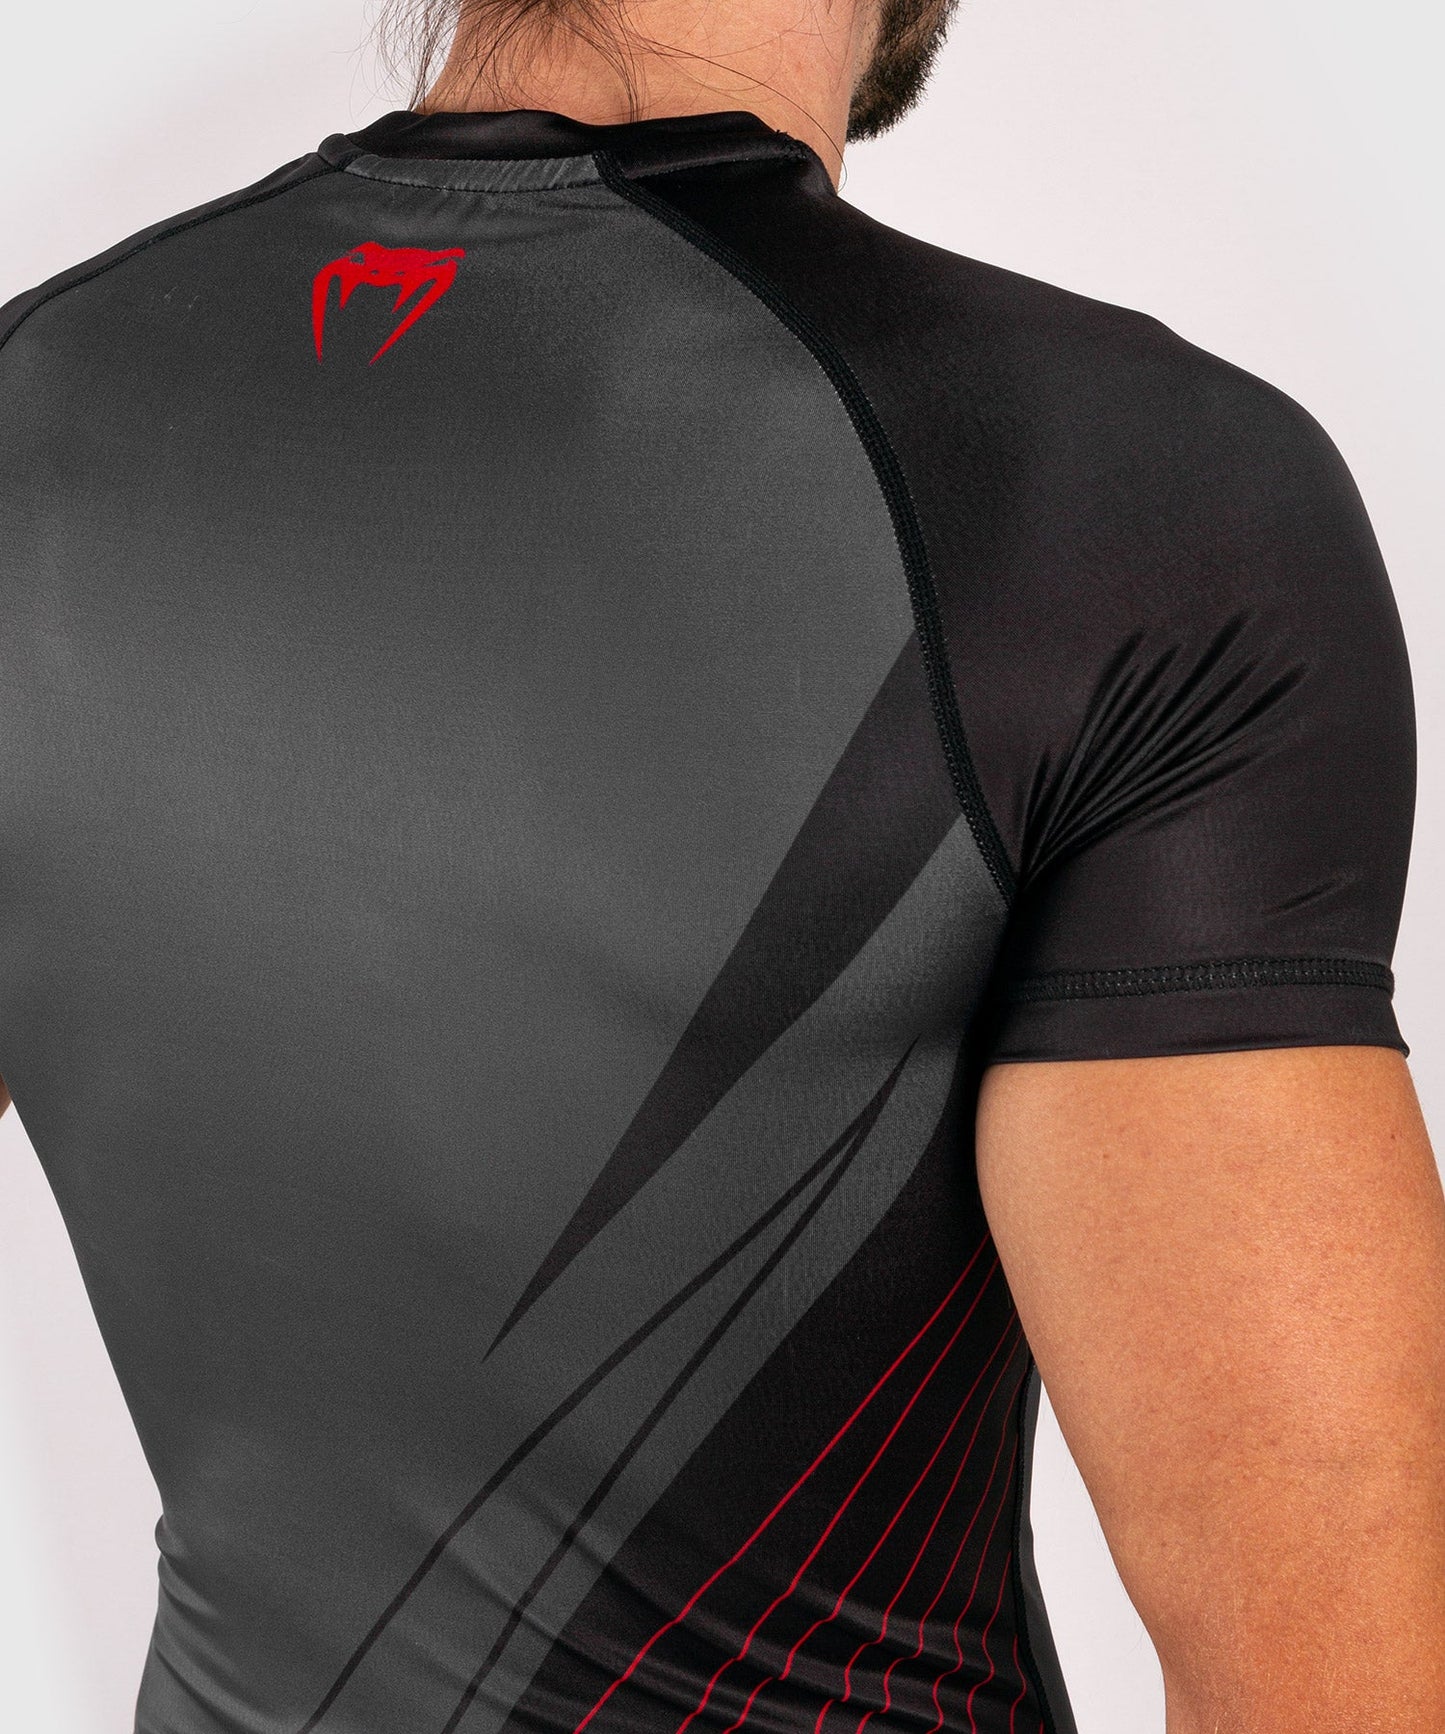 Venum Contender 5.0 Rashguard - Short sleeves - Black/Red